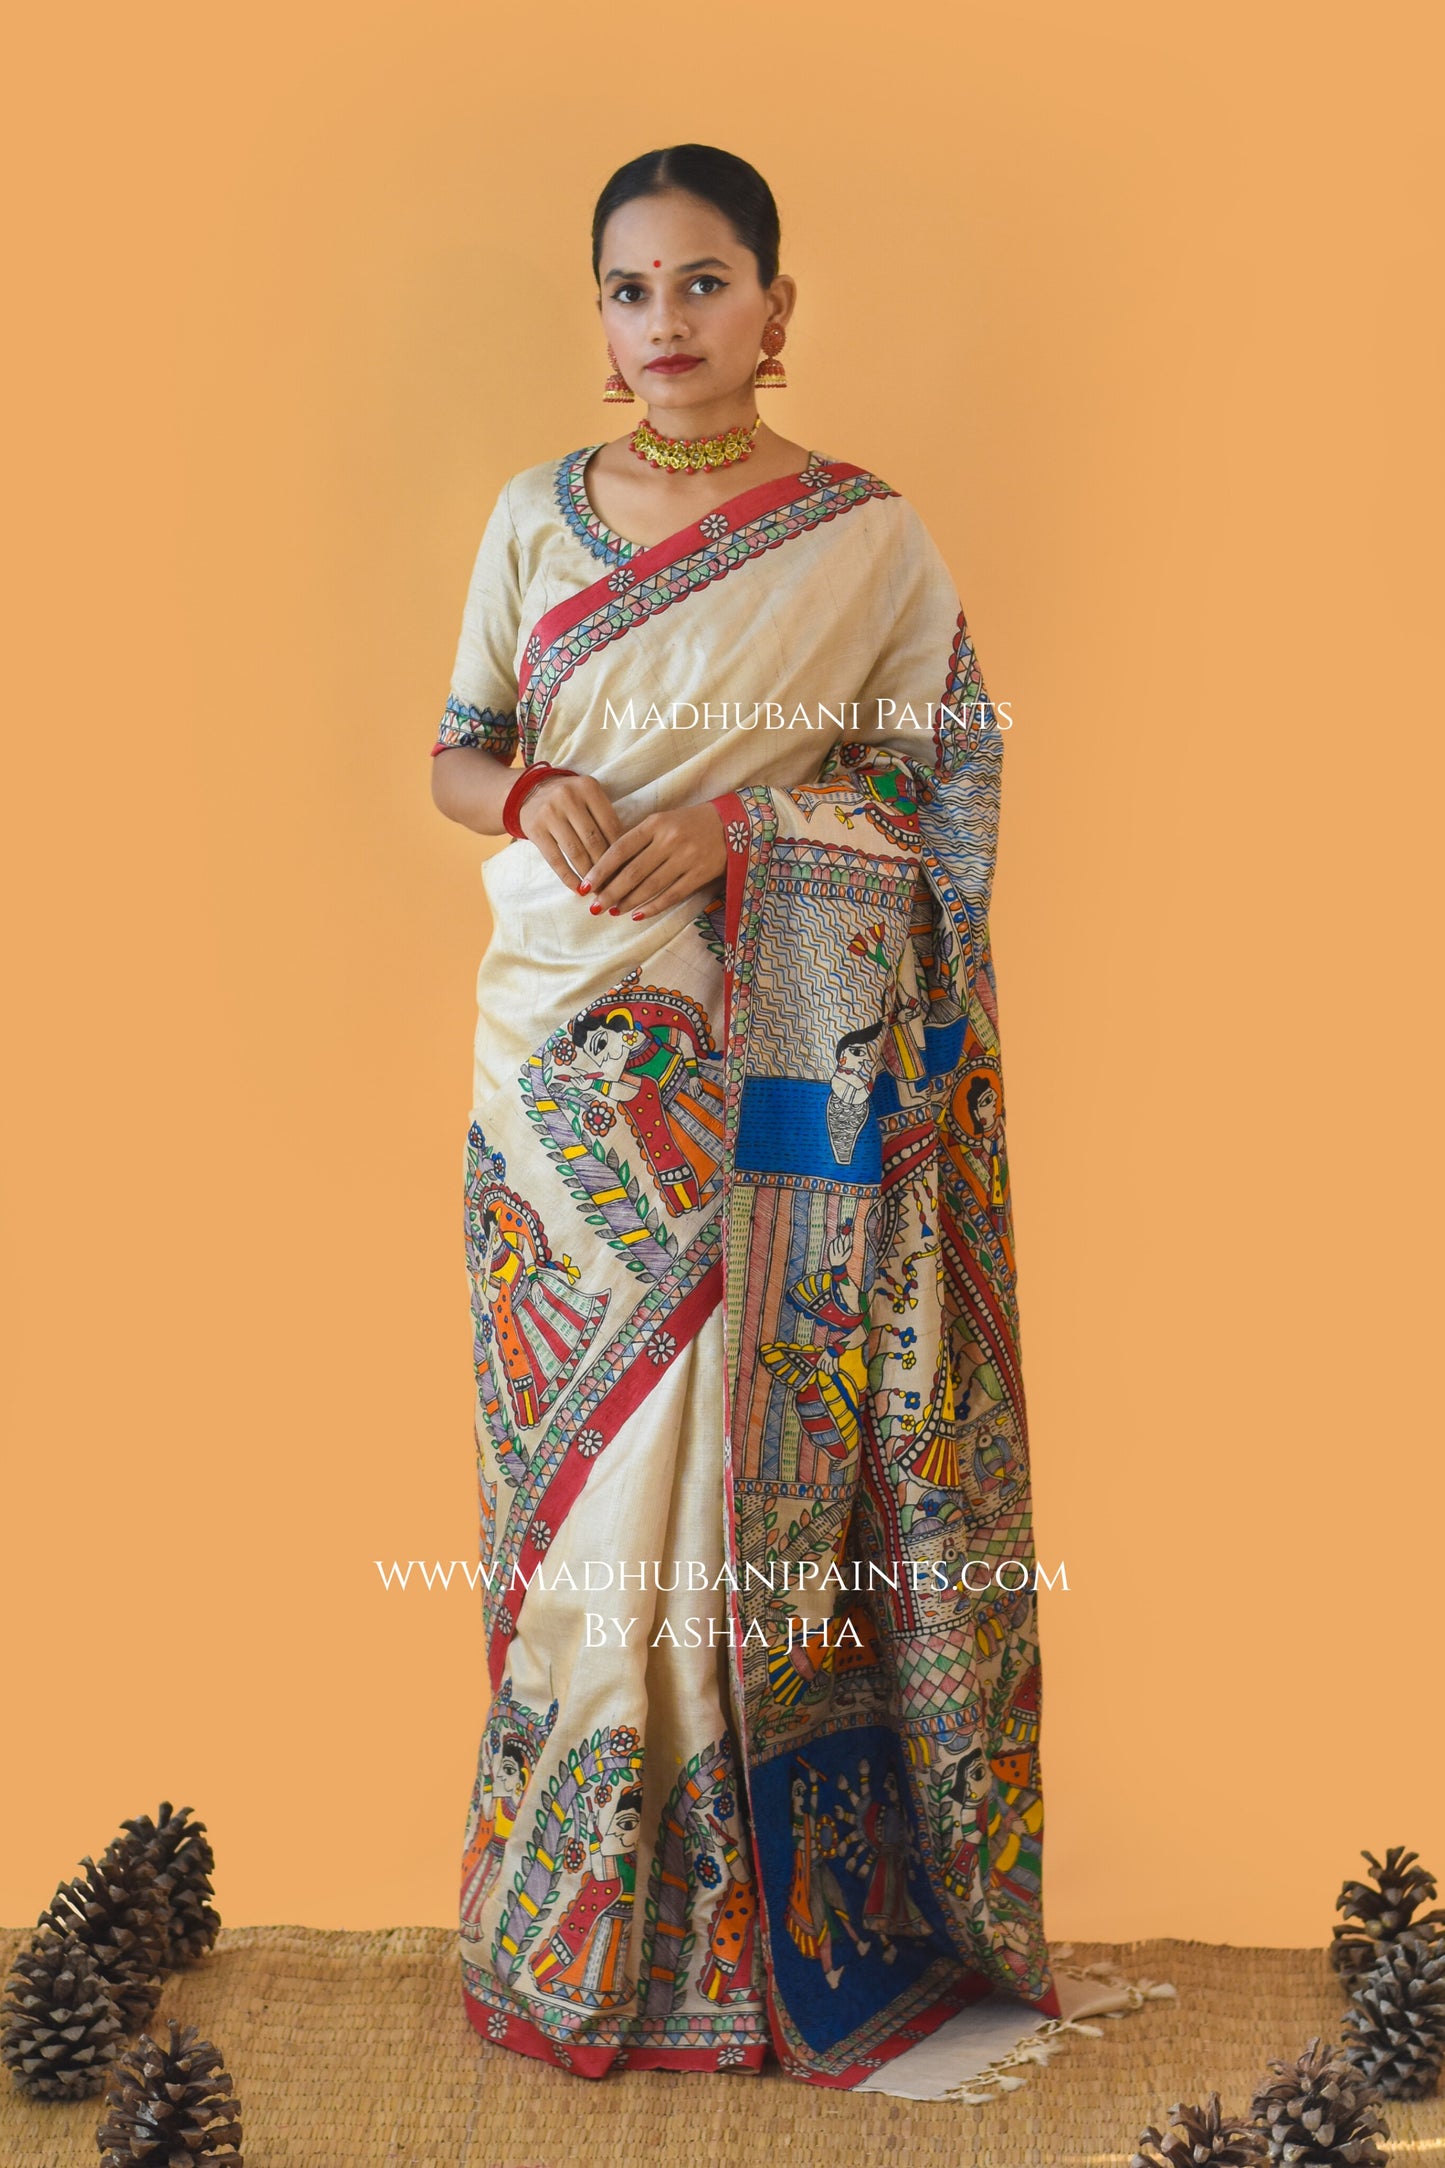 NARAYAN AVATAR Hand-painted Madhubani Tussar Silk Saree Blouse Set